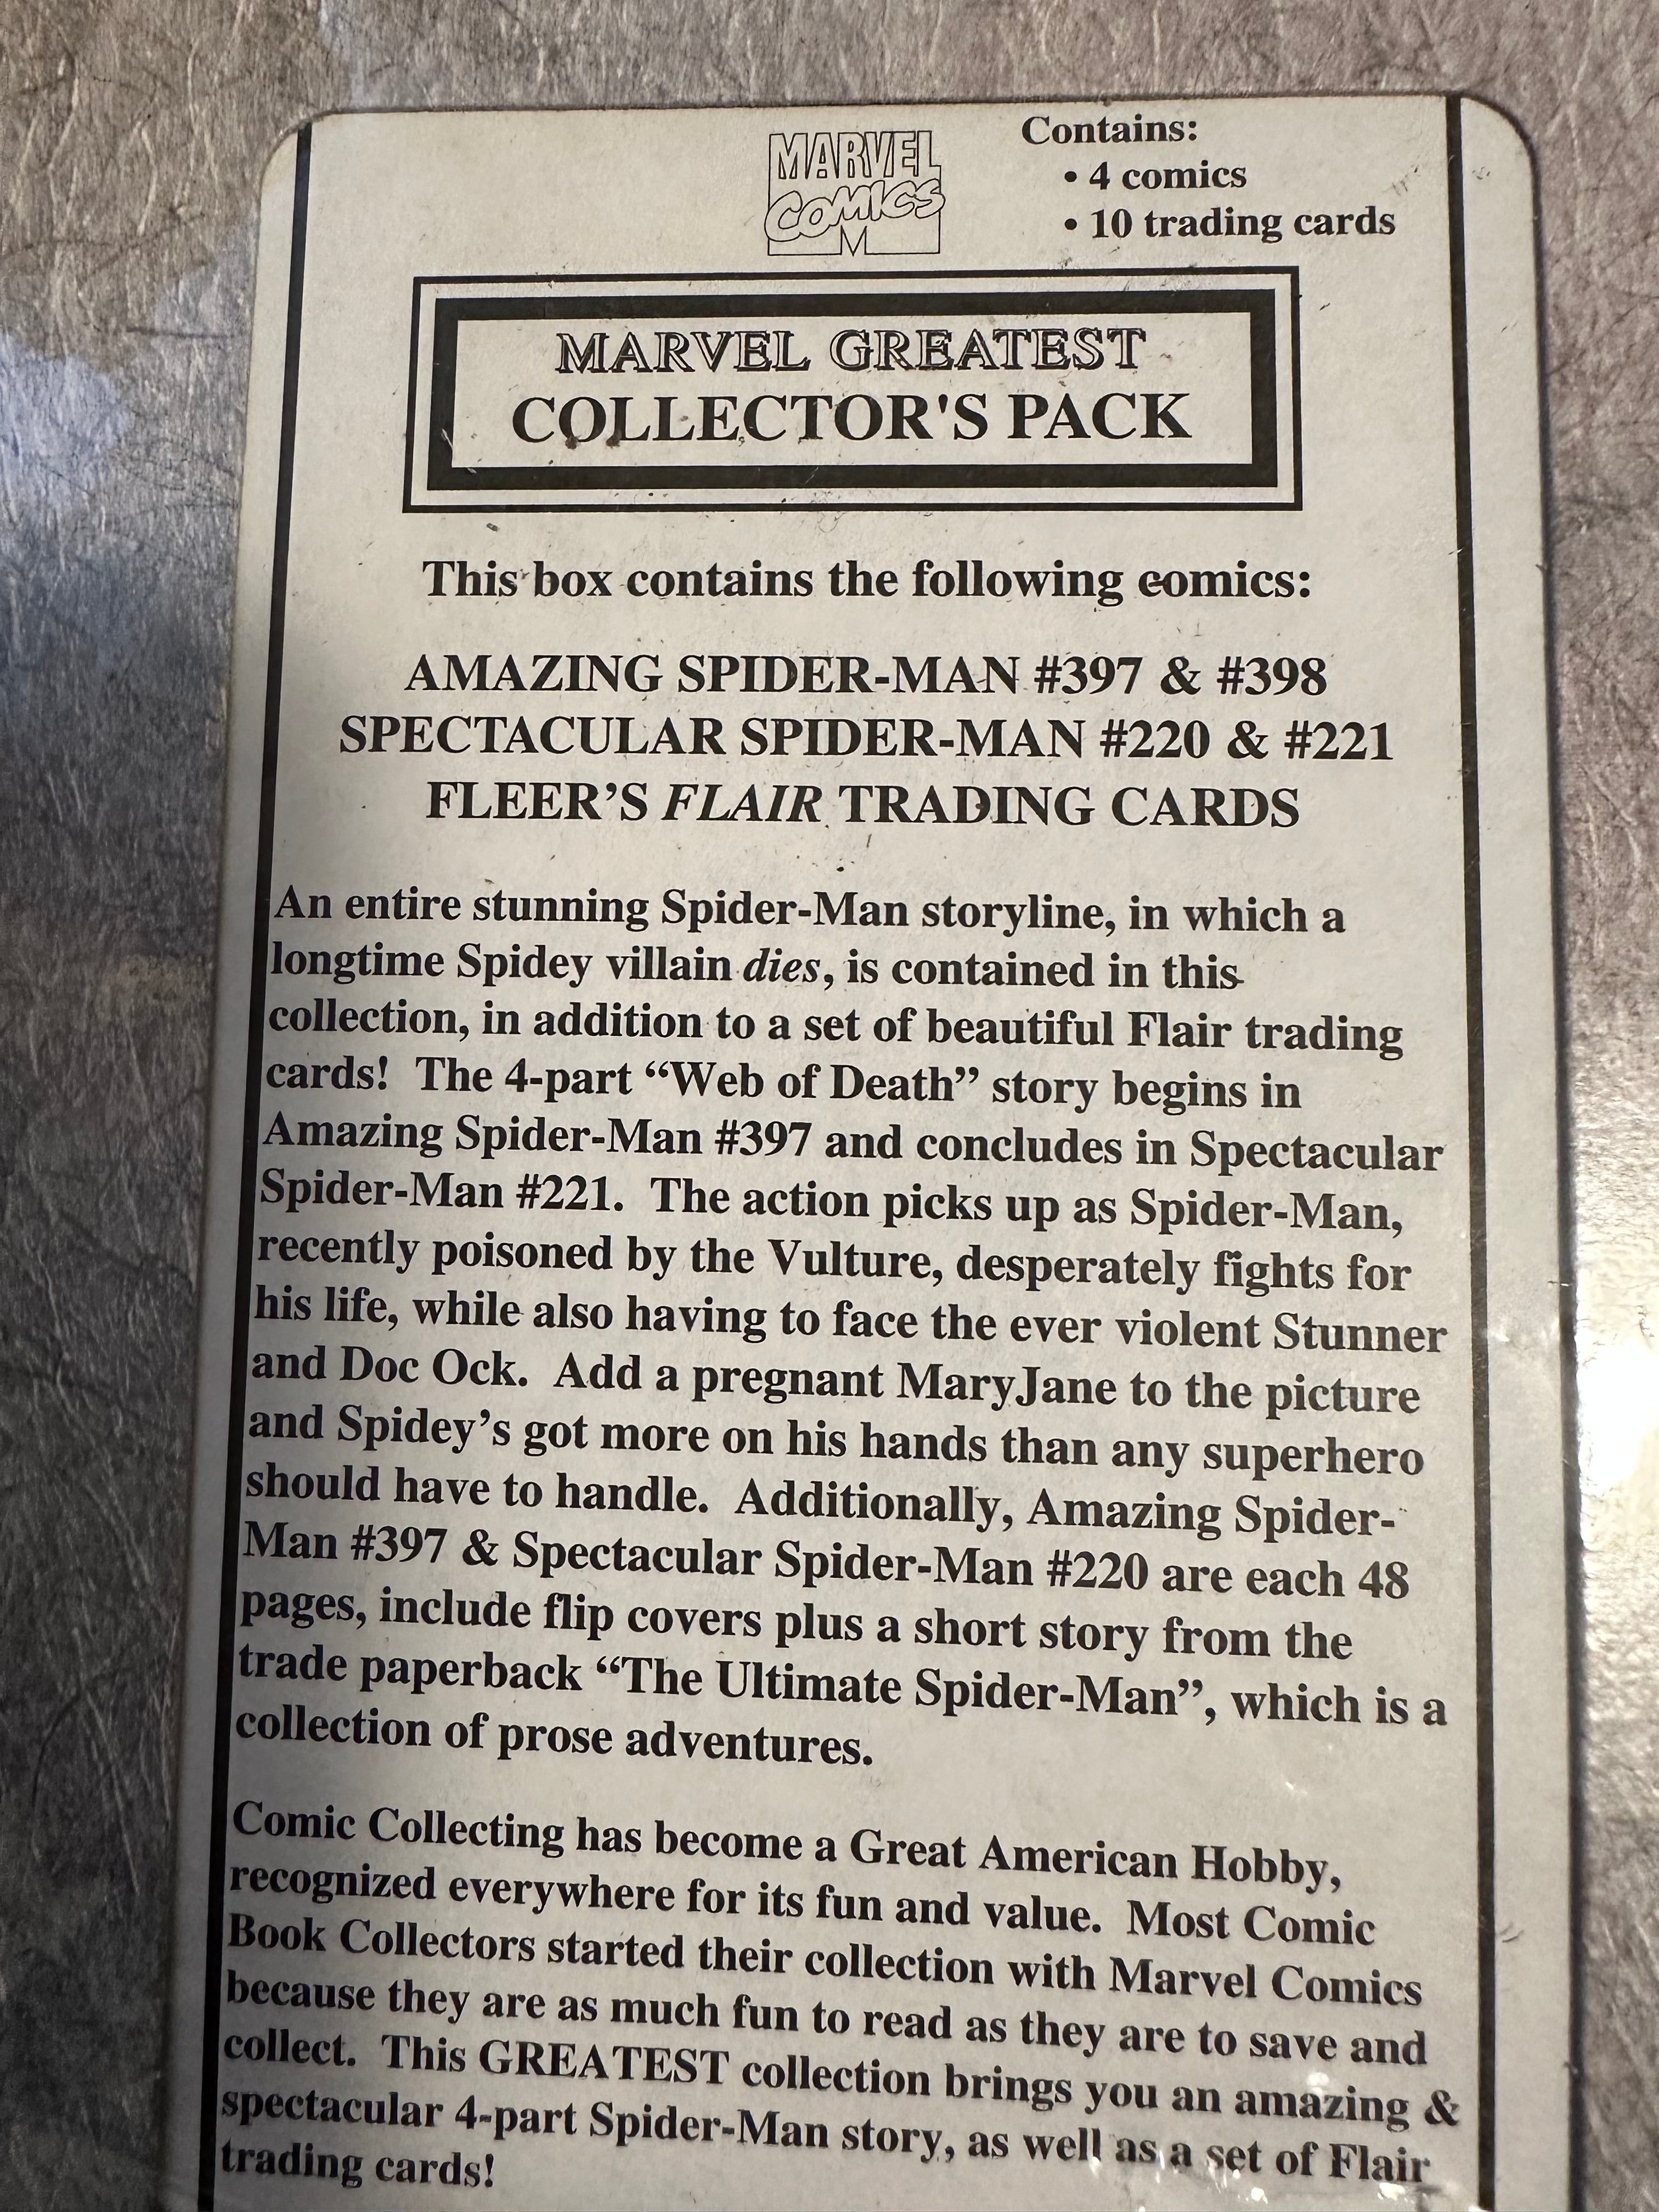 Marvel collectors factory sealed 4 spider-man vintage comics pack with Marvel fleer flair cards pack! 1990s